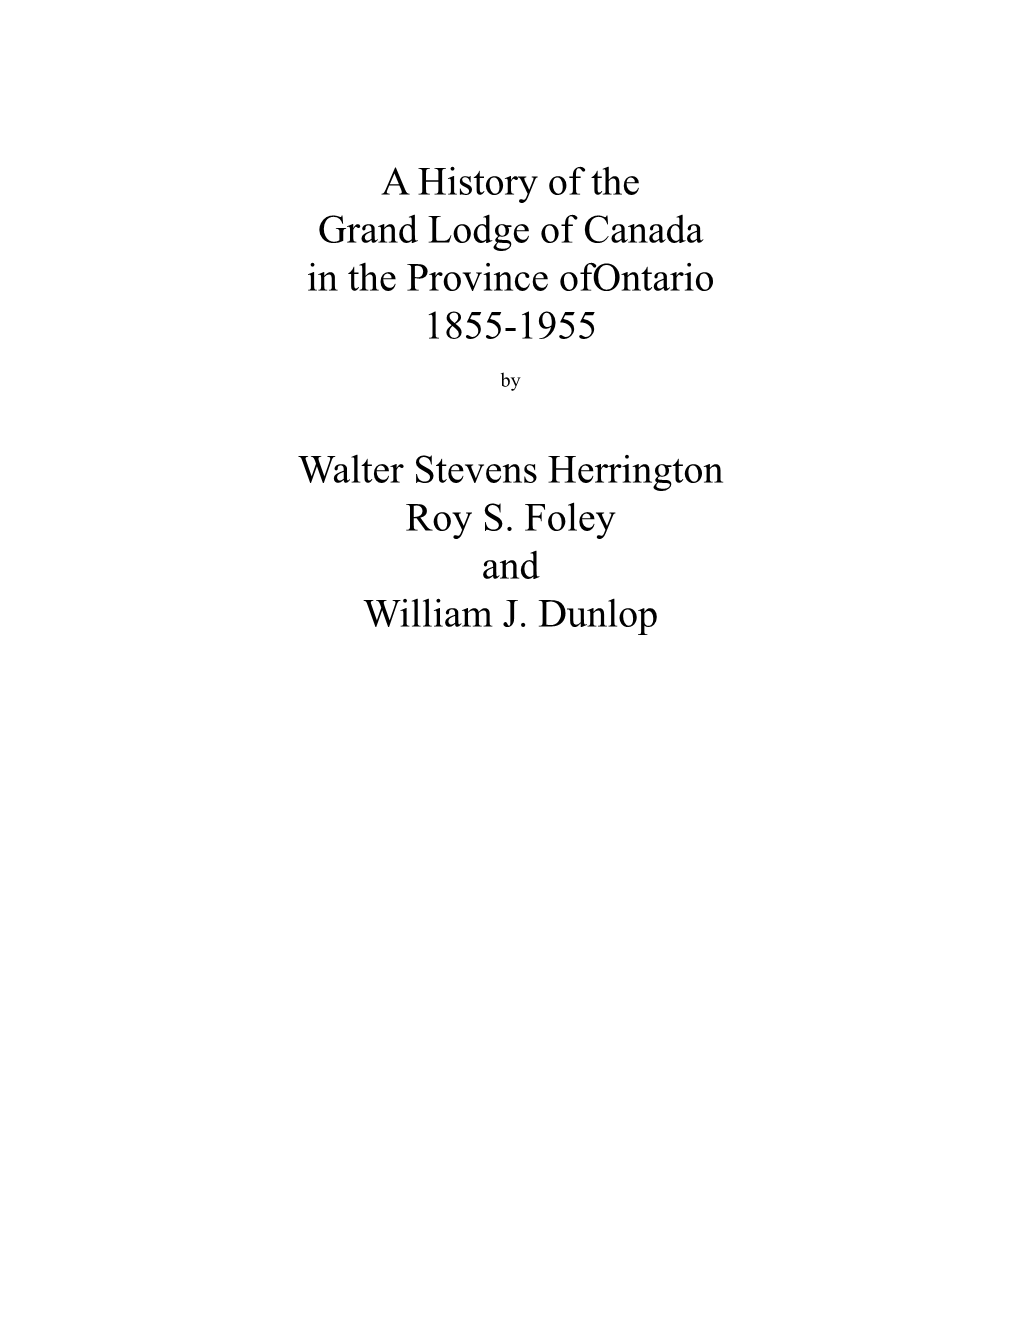 History of Grand Lodge 1855 1955